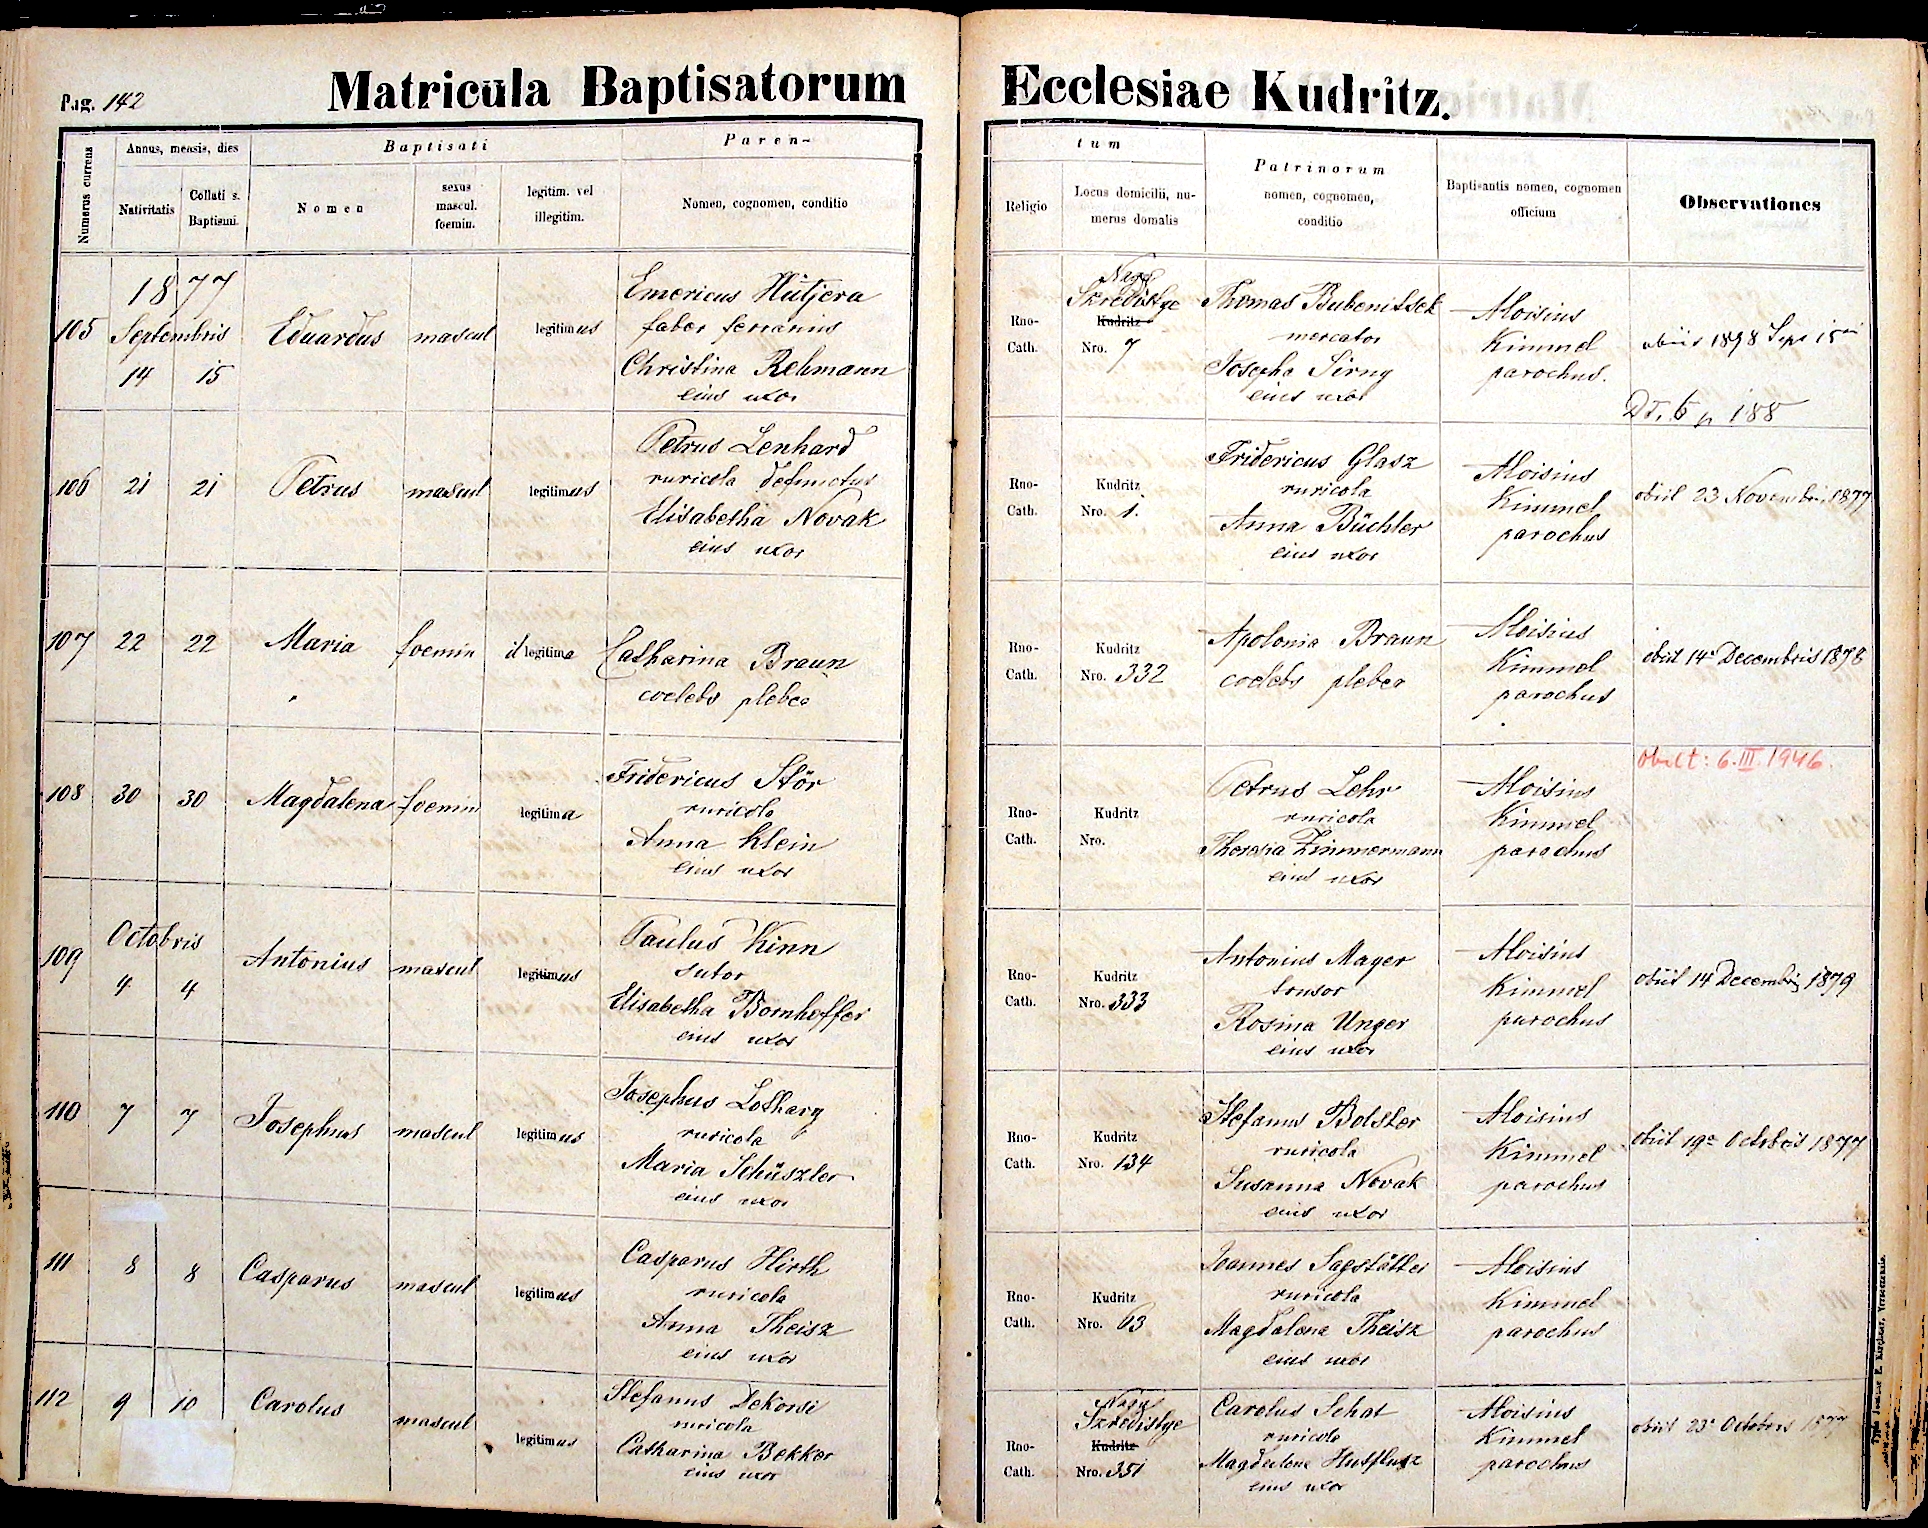 images/church_records/BIRTHS/1870-1879B/1877/142